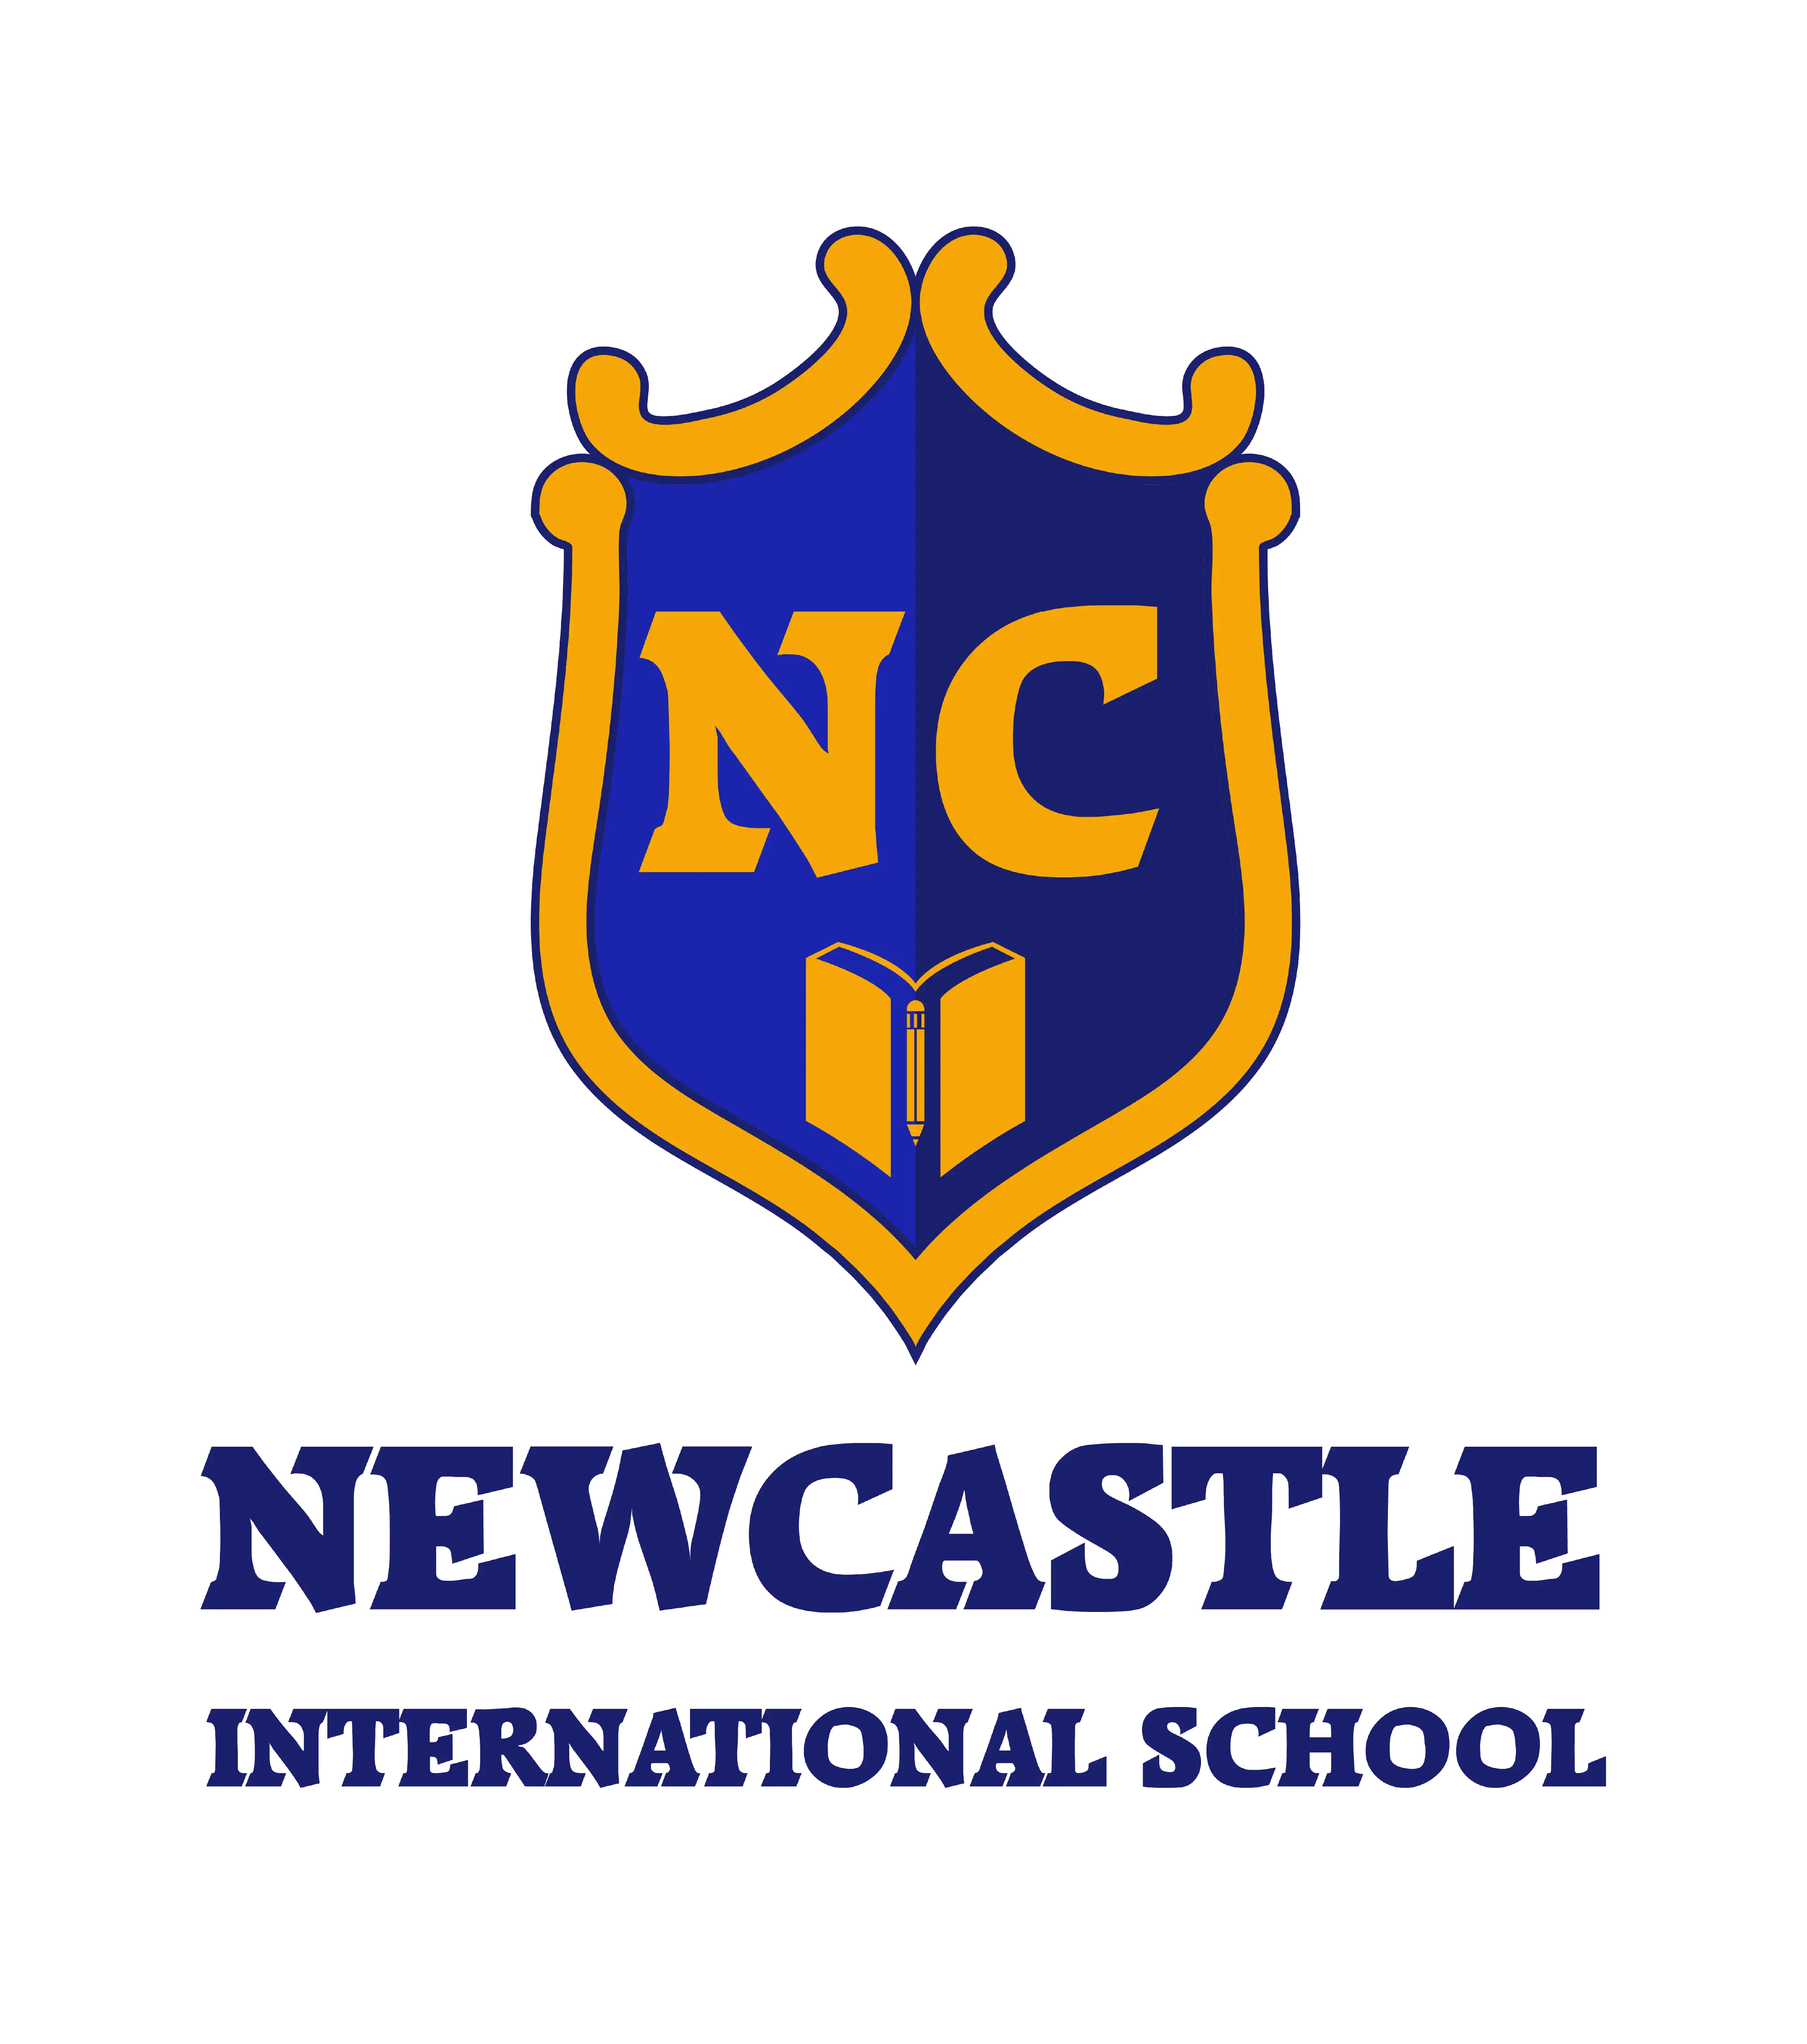 NEWCASTLE INTERNATIONAL SCHOOL